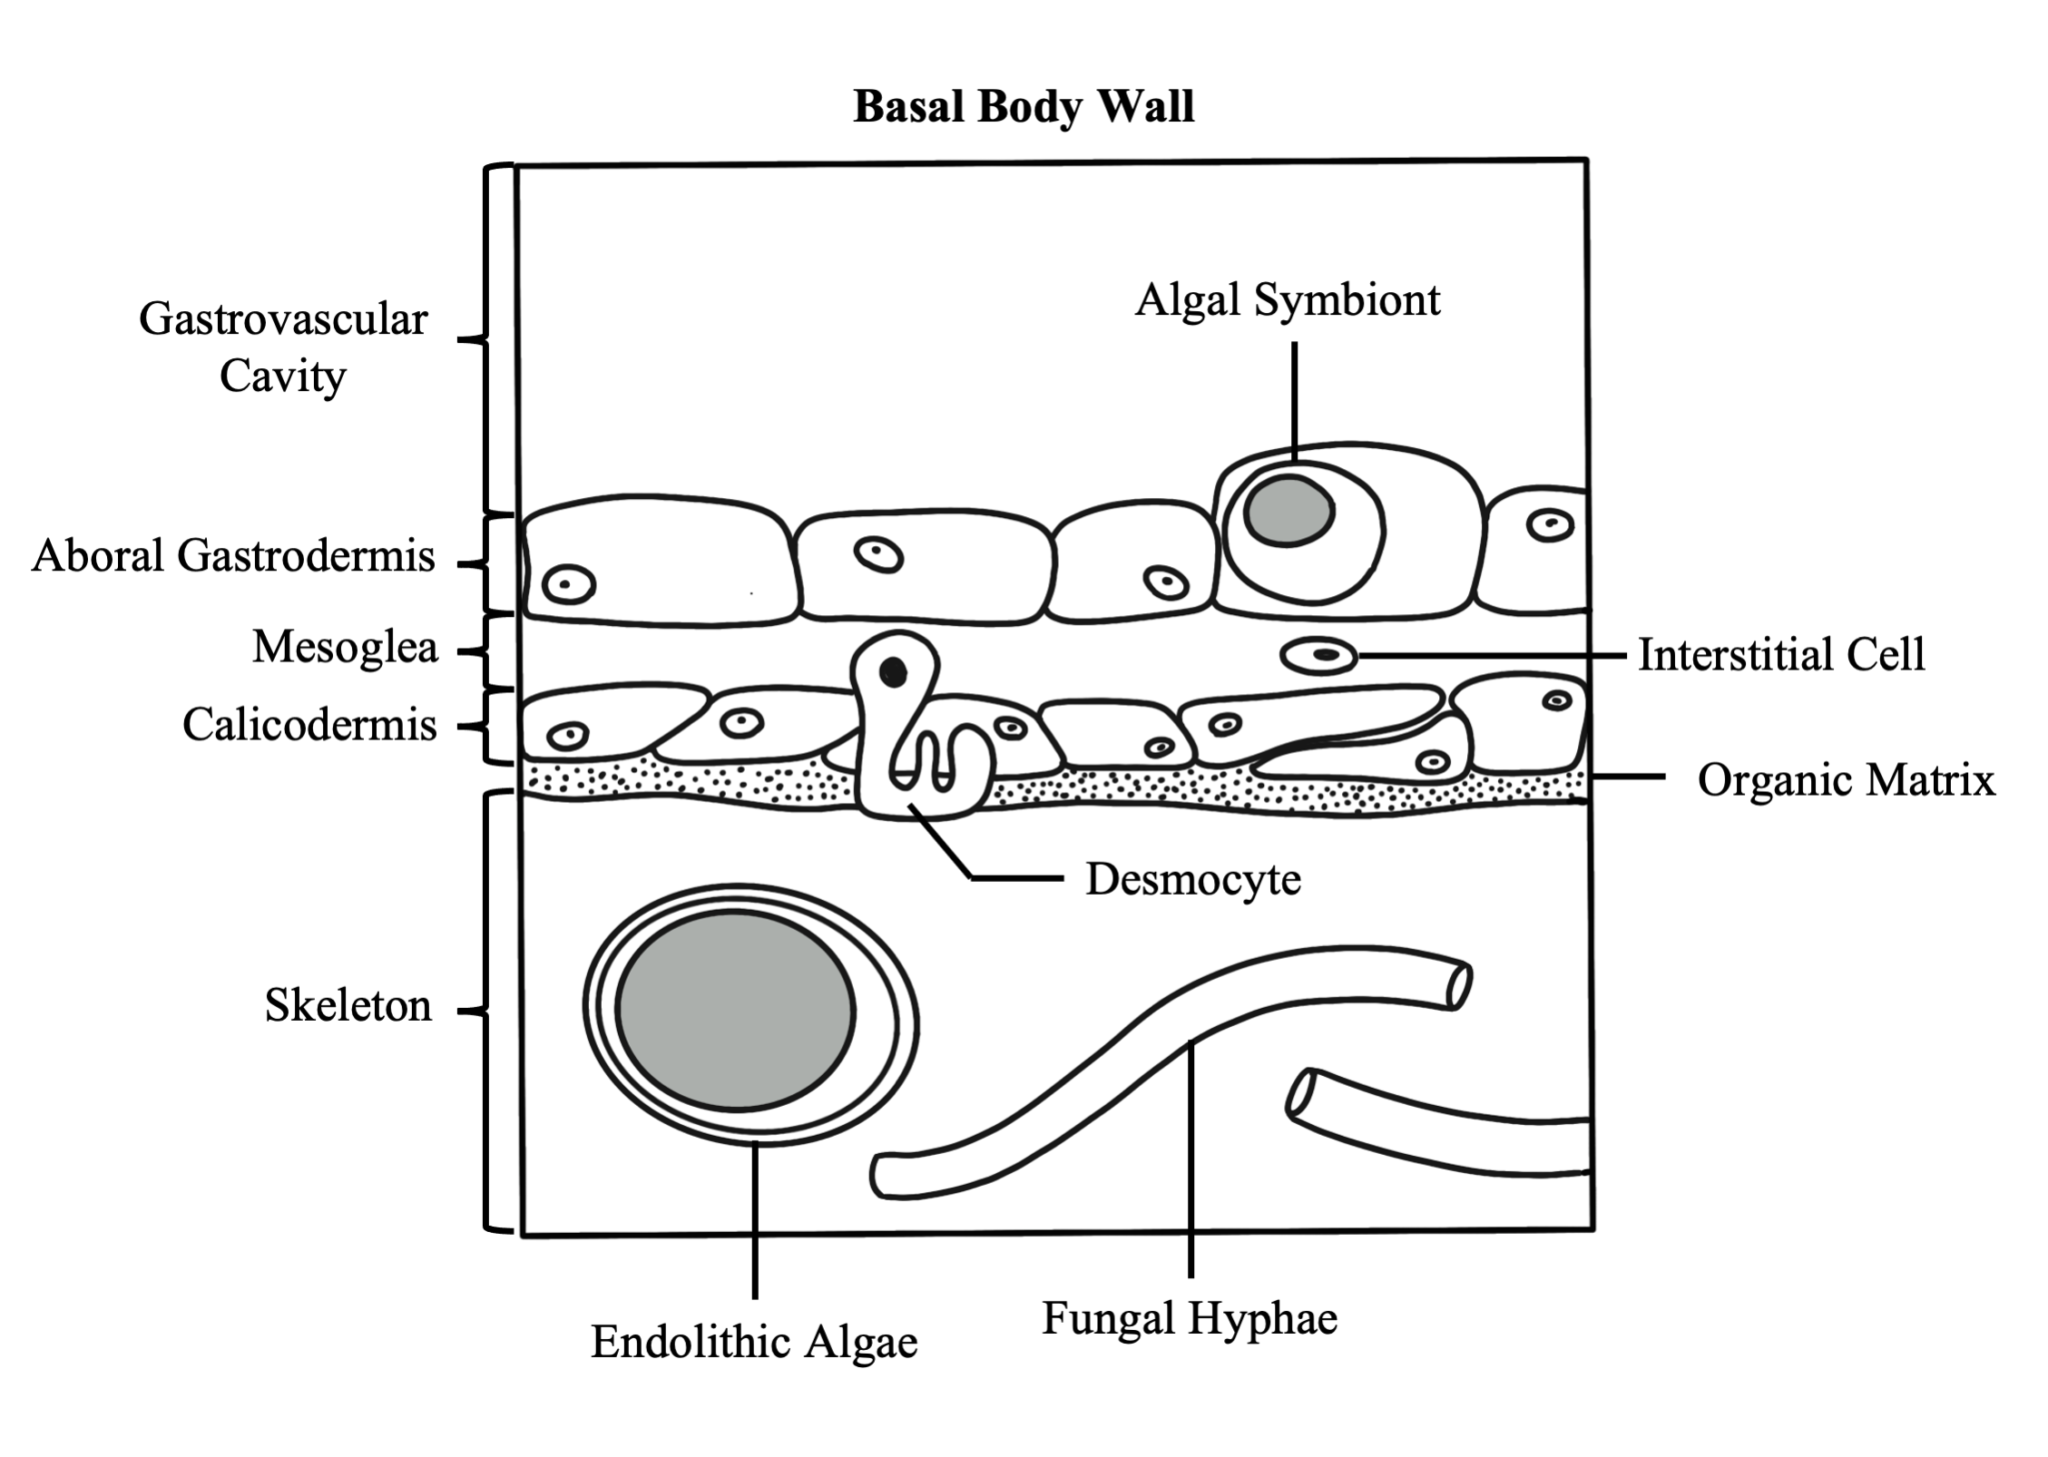 Basal Body Wall